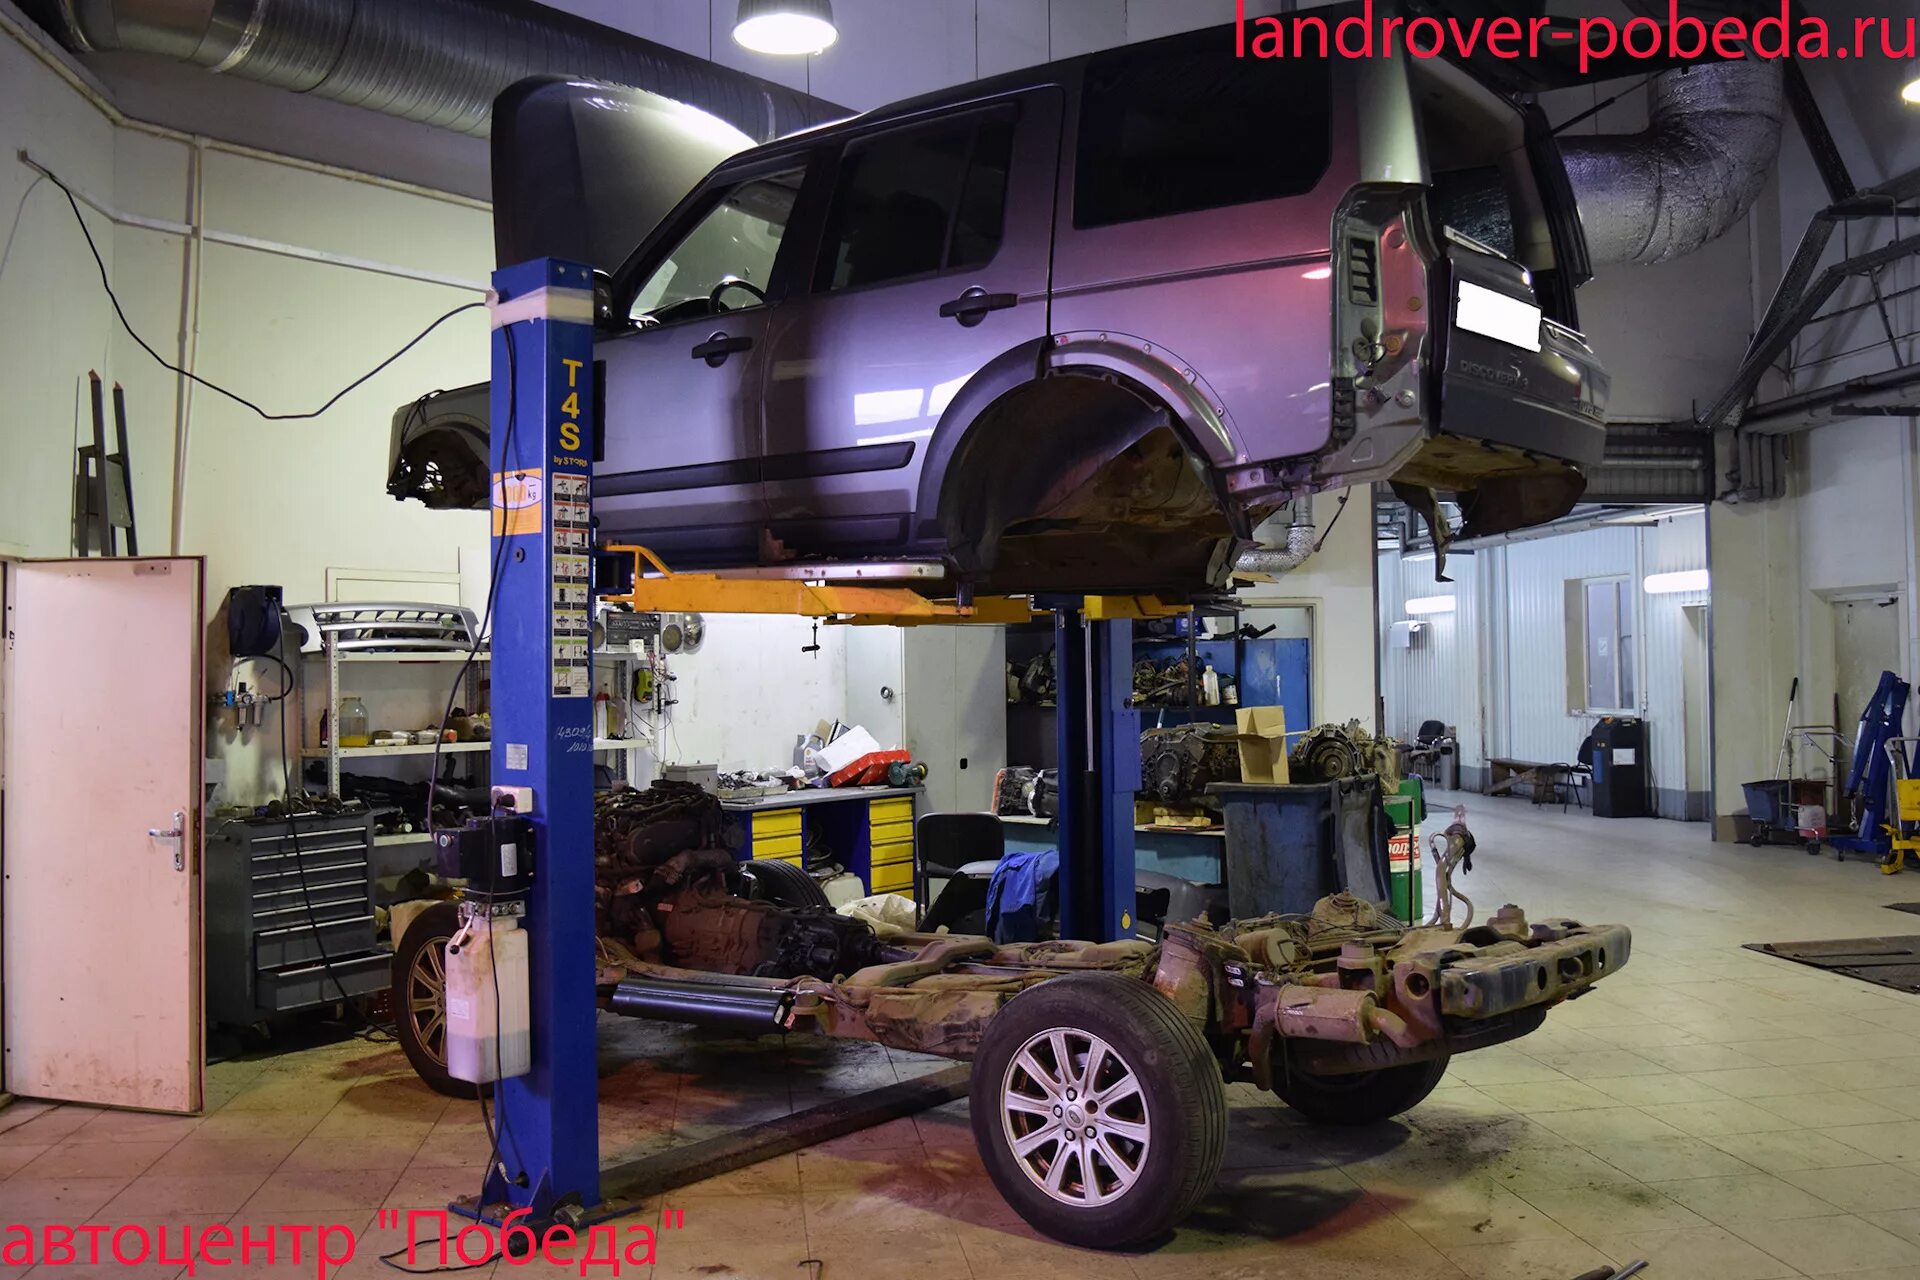 Ремонт дискавери 4. Range Rover Discovery 3 снятие кузова. Ленд Ровер Дискавери 3 дизель на подъёмнике. Подъёмник для Land Rover Discovery. Land Rover Discovery 3 поднятие кузова.